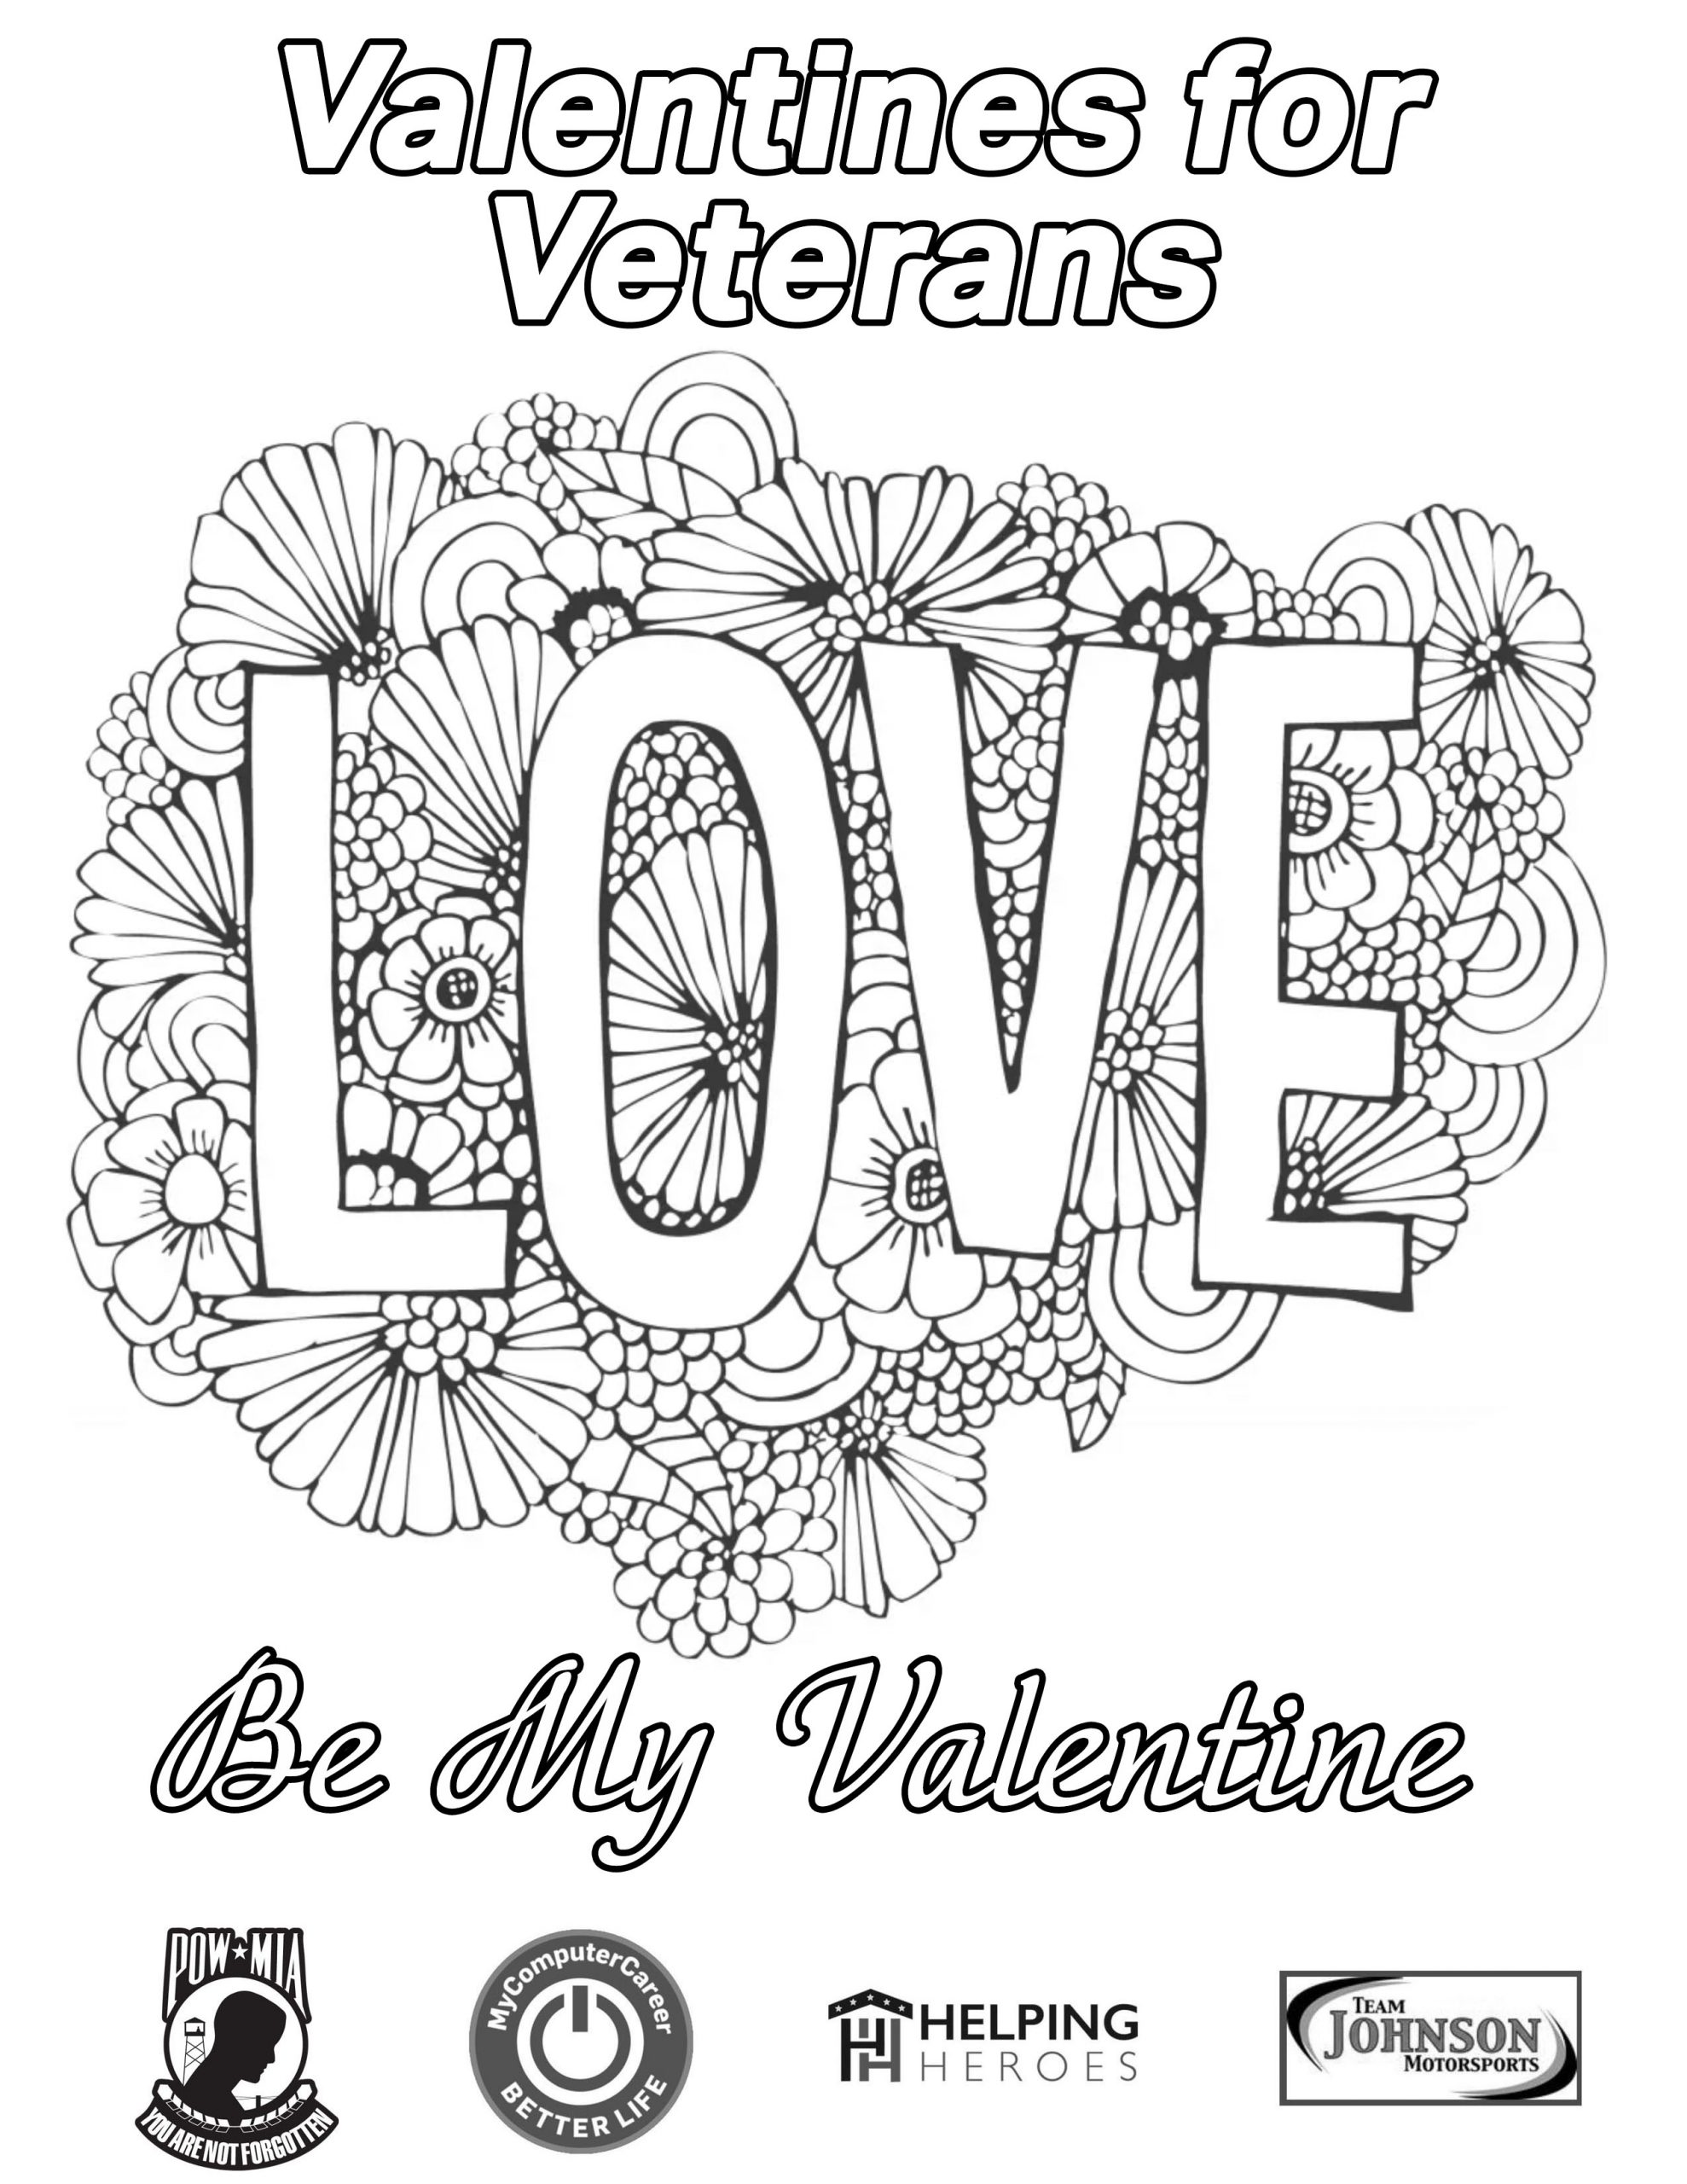 Valentines for veterans